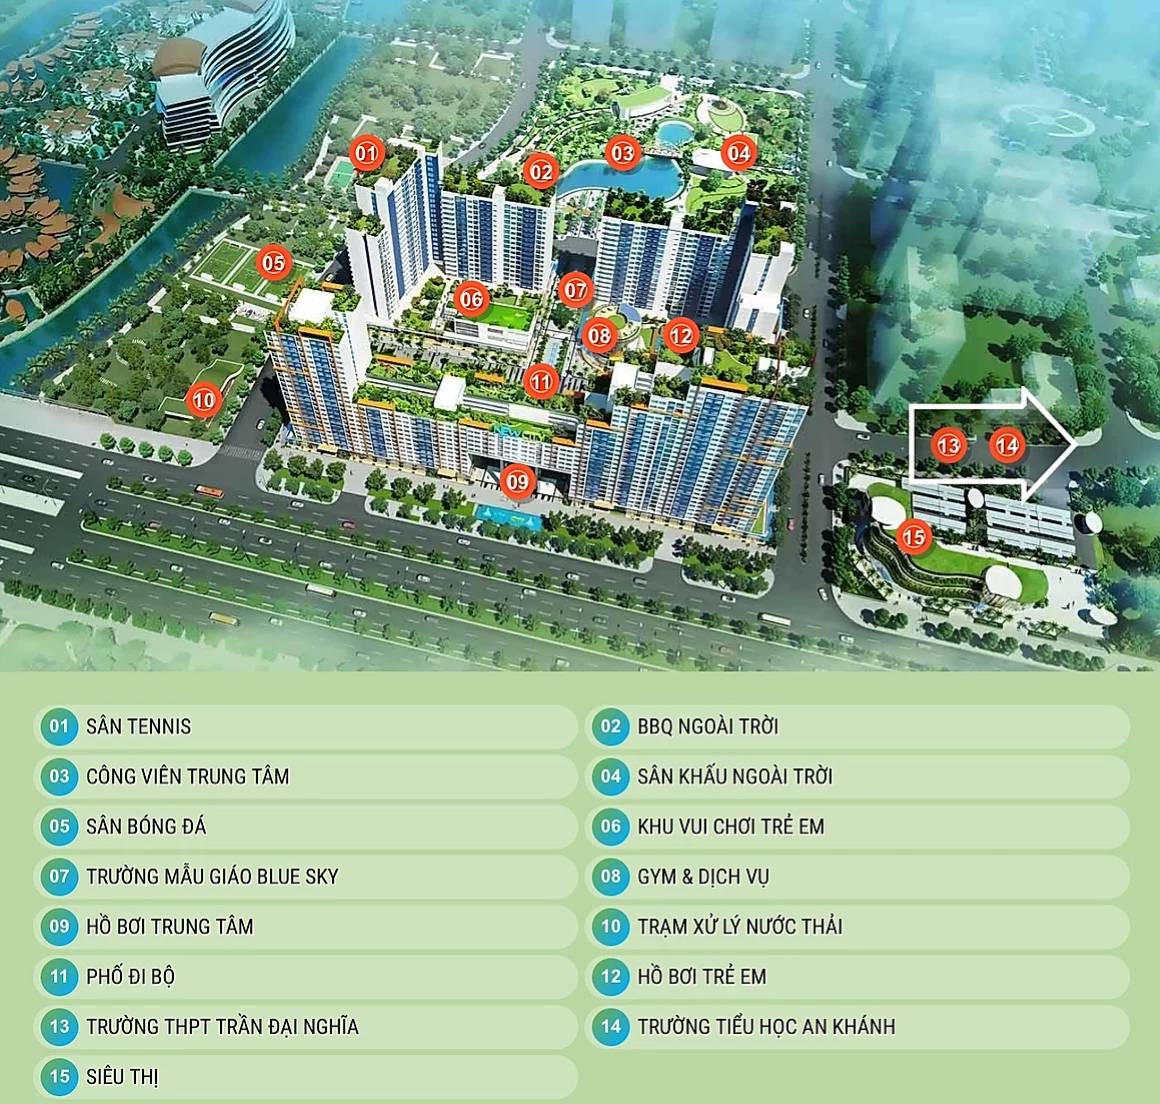 nhung-cau-hoi-thuong-gap-ve-chung-cu-new-city-thu-thiem-cho-nguoi-mua-lan-dau-tham-khao-onehousing-3